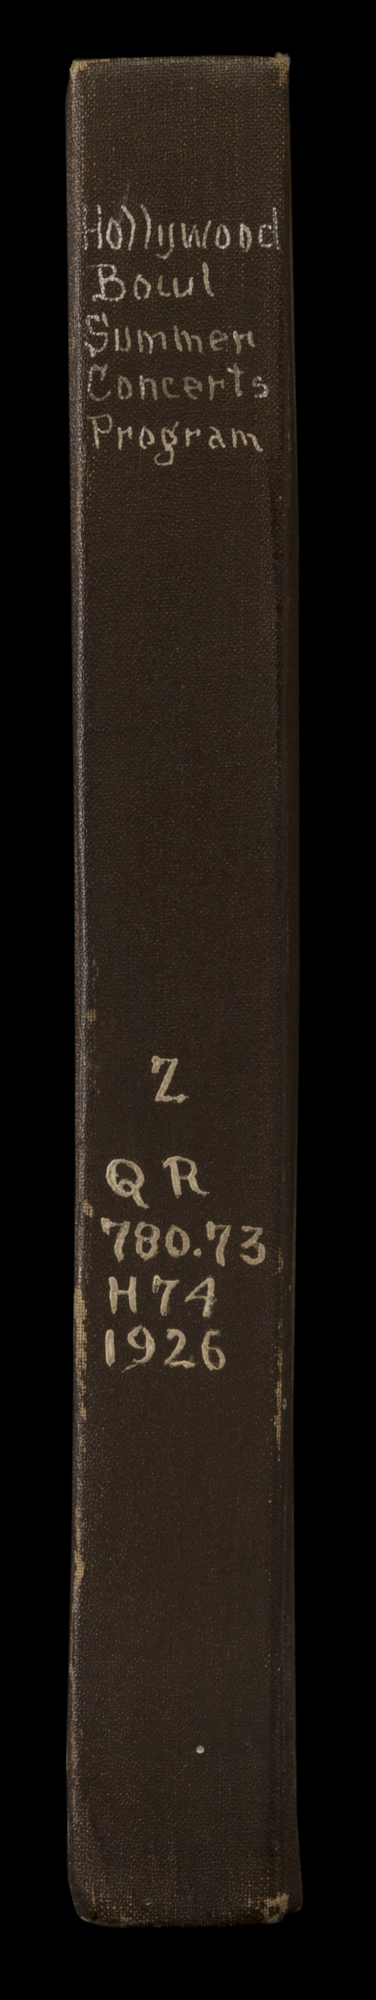 HB_ProgramBook_Spine_1926.jpg